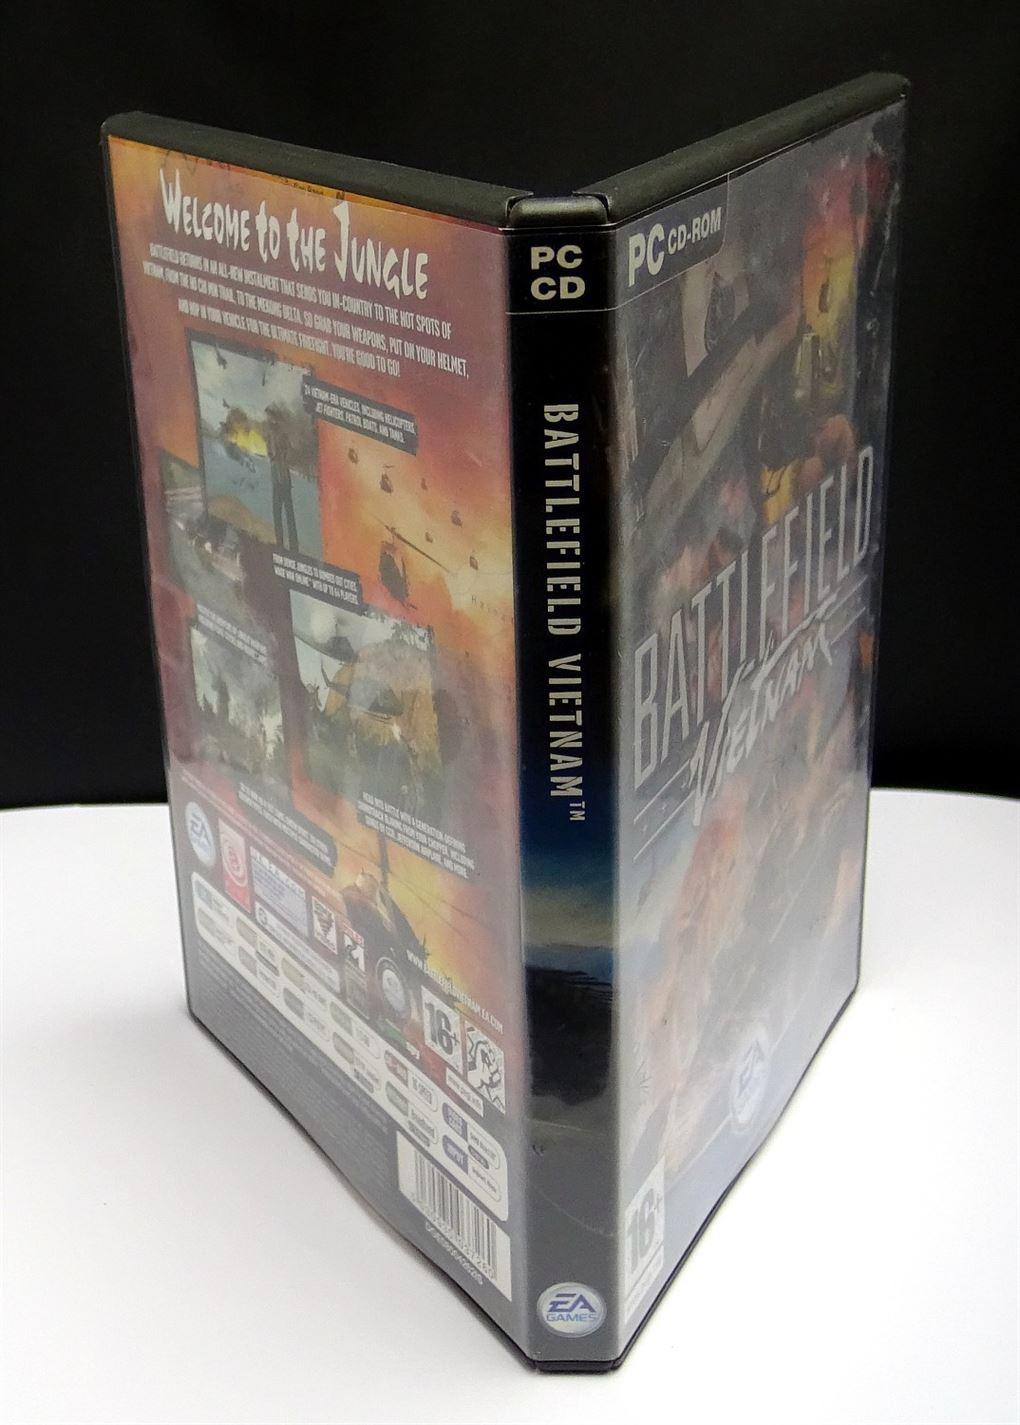 Battlefield Vietnam (PC) - UK Seller